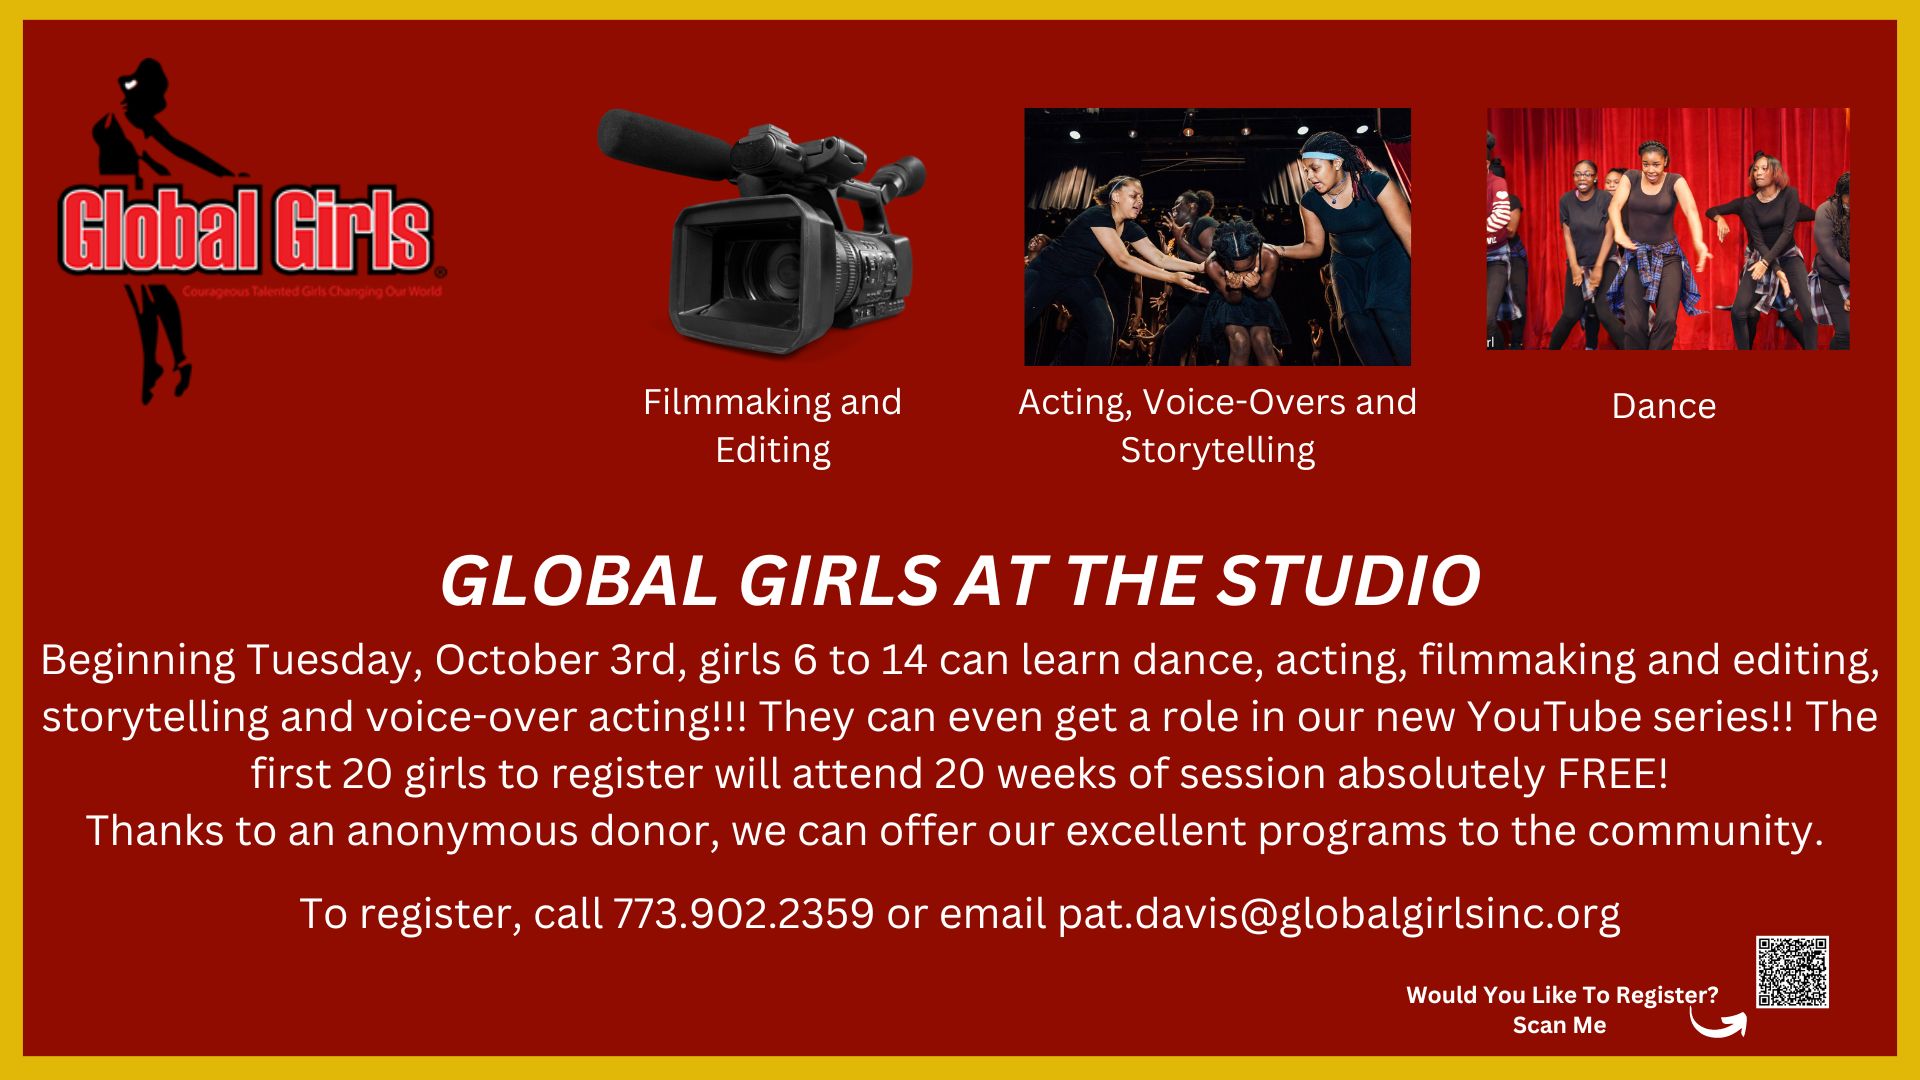 Global girls at the studio